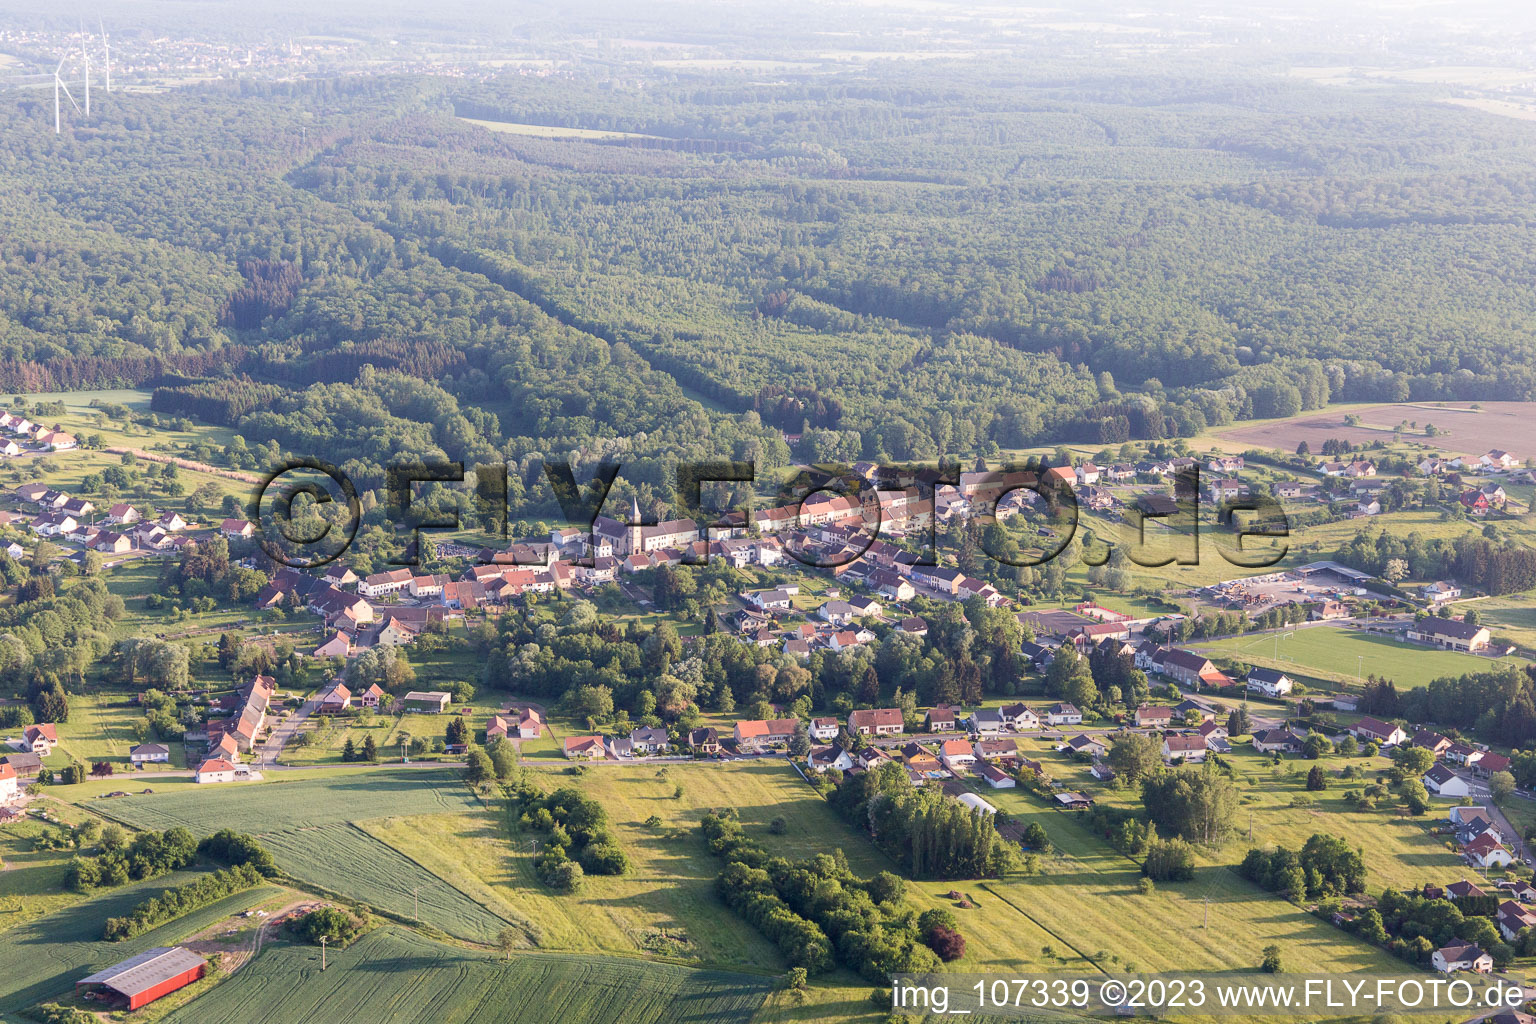 Aerial view of Siltzheim in the state Bas-Rhin, France